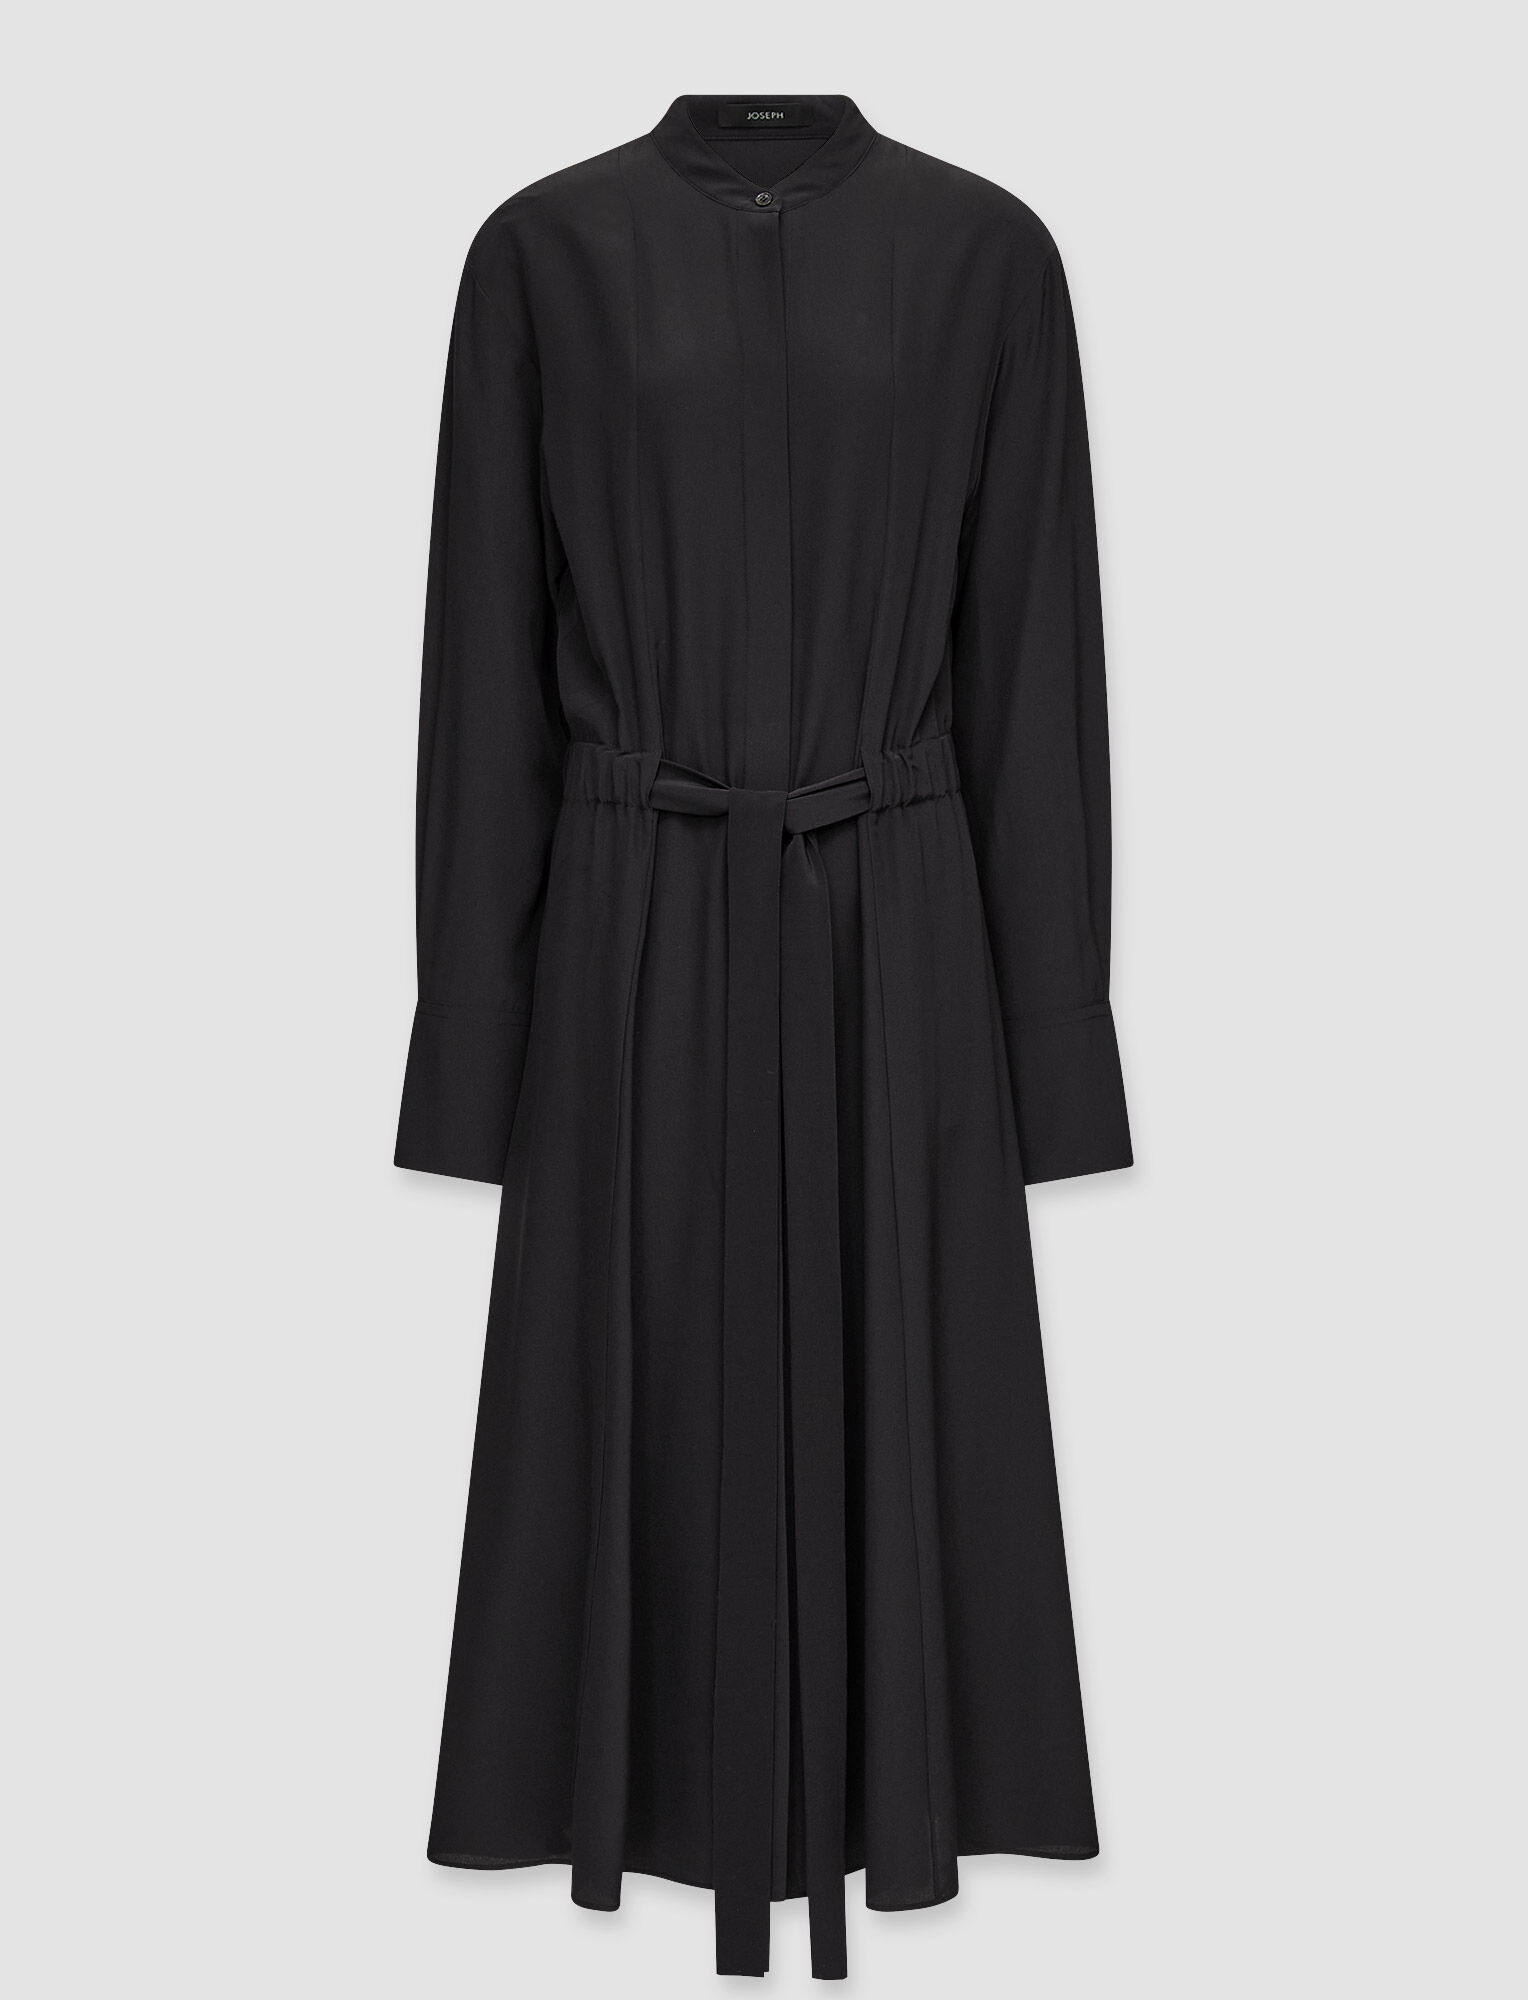 Joseph, Silk Crepe de Chine Fairbaim Dress, in Black